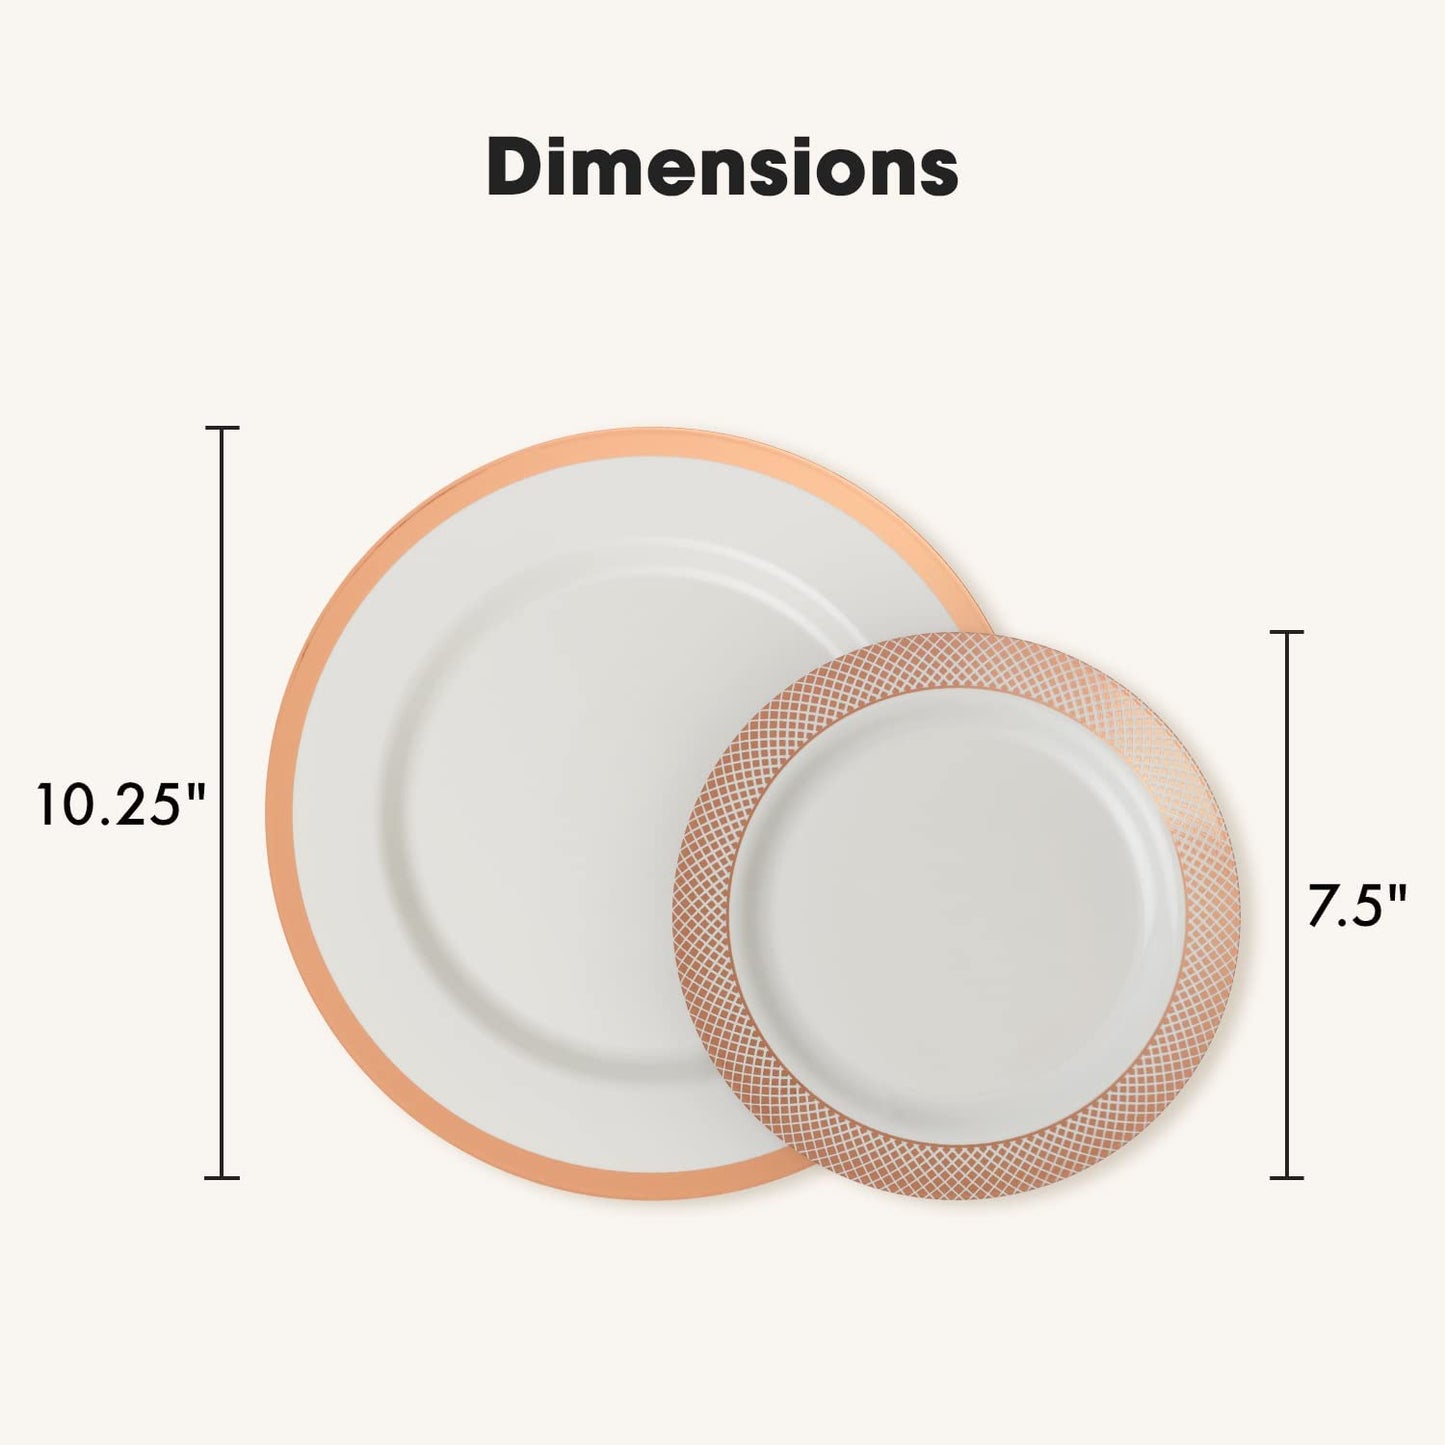 60 PCS Rose Gold Plastic Plates - 30 Dinner Plates & 30 Salad or Dessert Plates with Grid Design